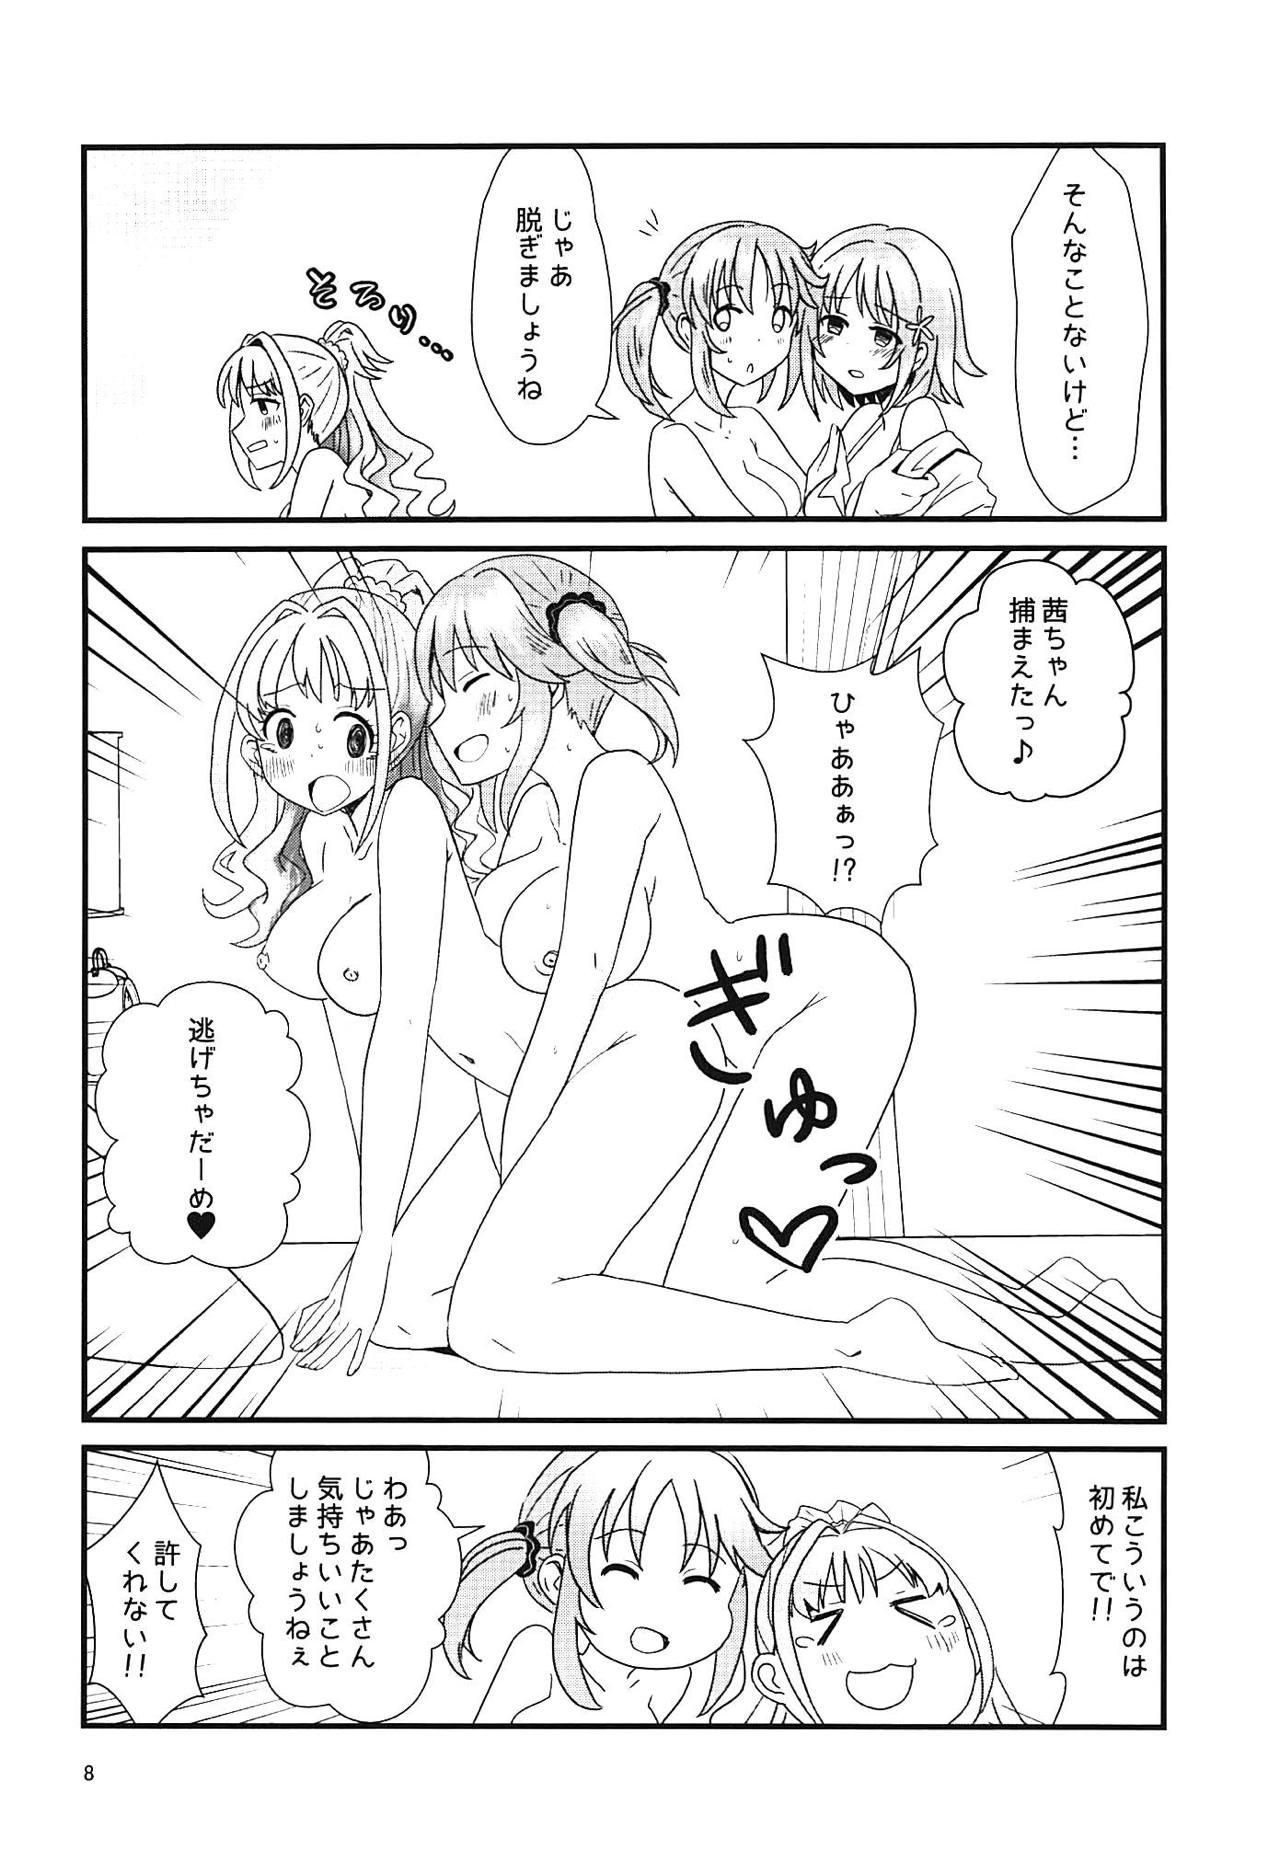 Licking Yugami no Tobira - The idolmaster Fit - Page 7